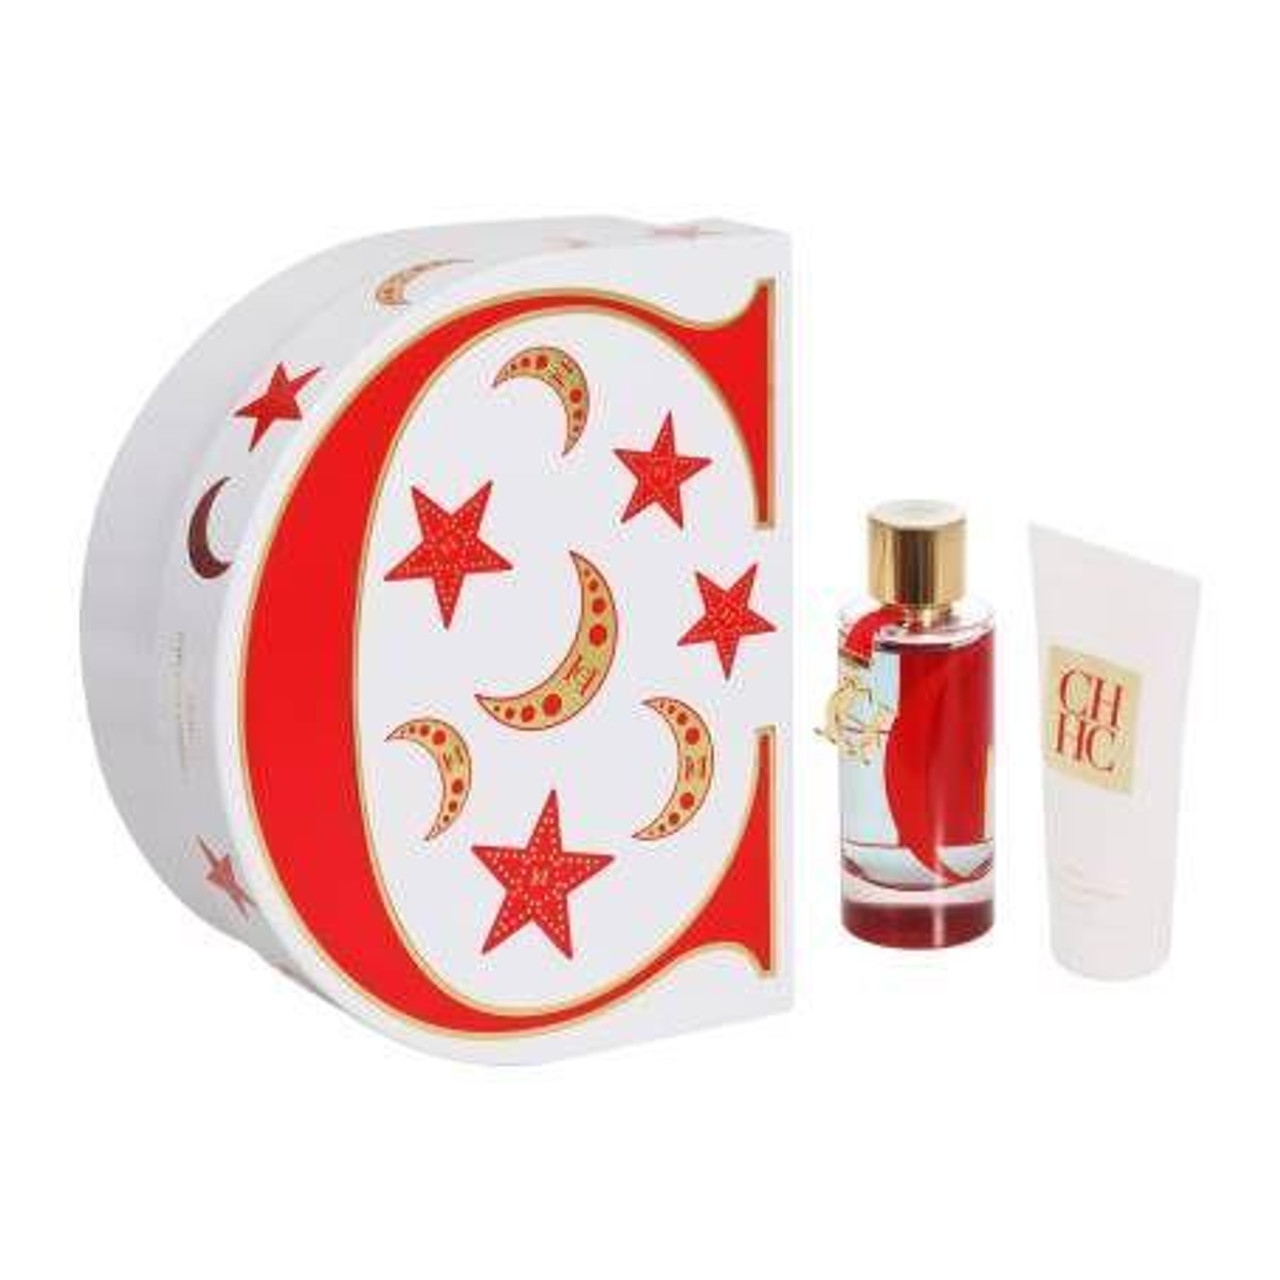 CH L`Eau Carolina Herrera By Carolina Herrera Perfume For Women 2PCS SET  INCLUDES 3.4OZ EAU DE TOILETTE SPRAY WOMEN AND BODY LOTION 3.4OZ -  Hollywood Style Perfumes